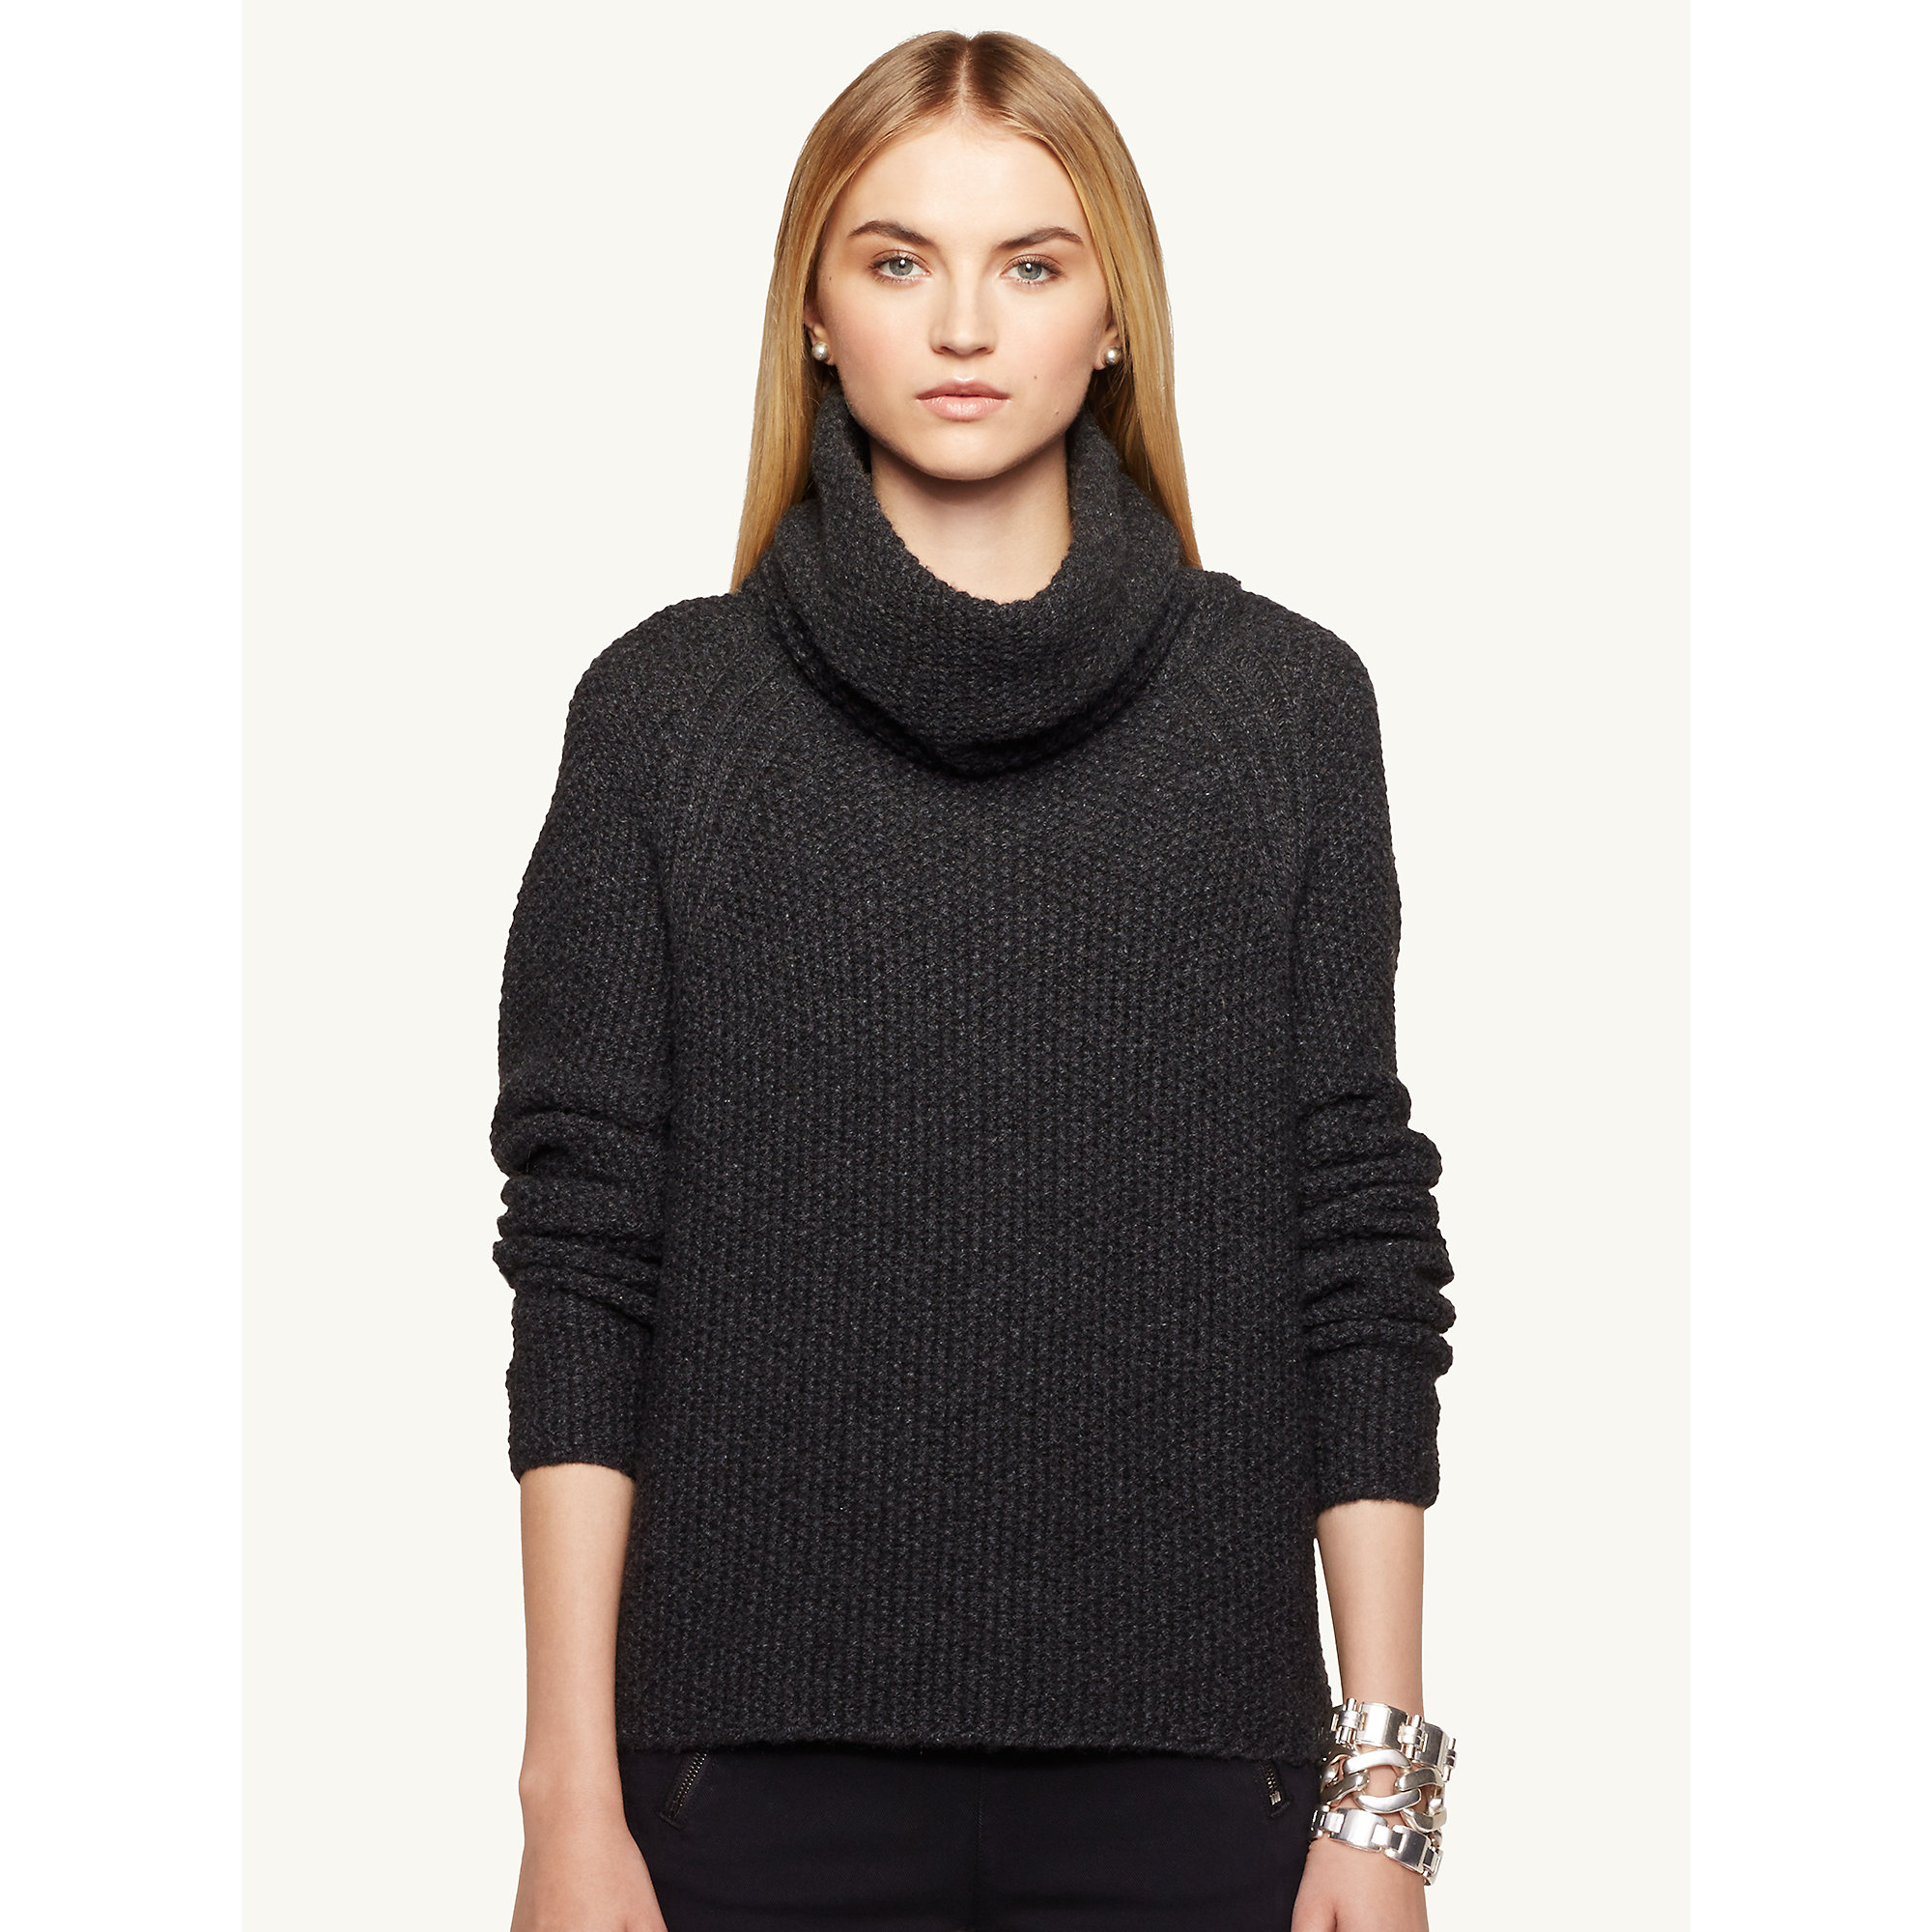 Lyst - Ralph Lauren Black Label Cashmere Turtleneck Sweater in Gray